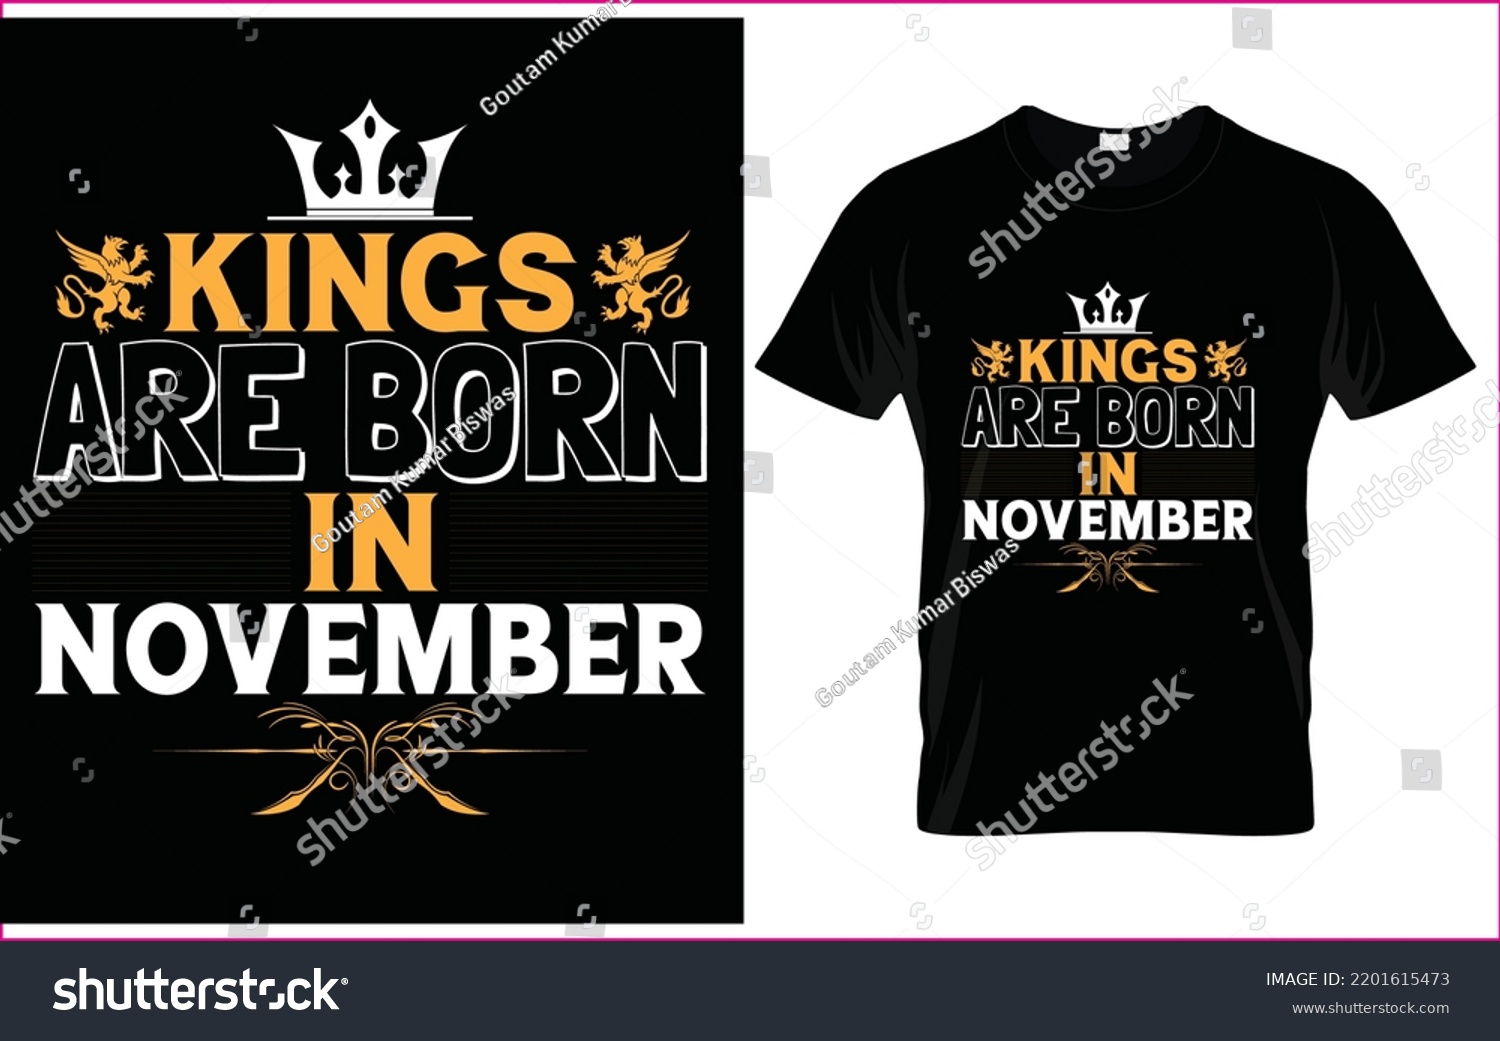 SVG of Kings are born in november tshirt desgin template vector for tshirt printing.  svg